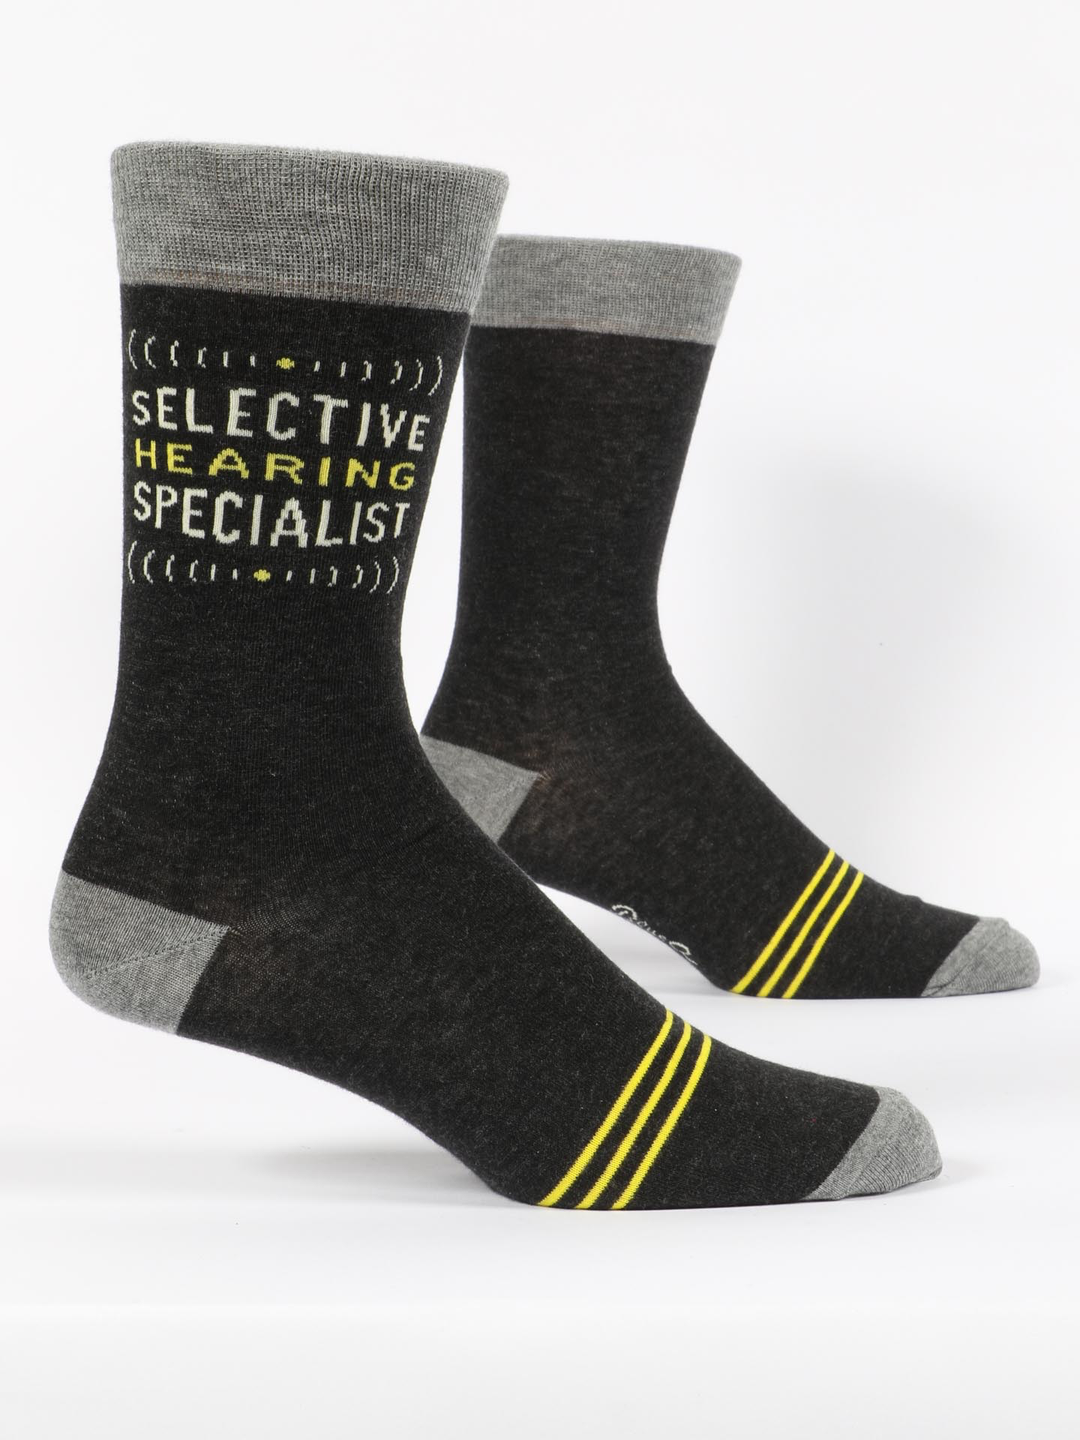 Selective Hearing Men's Crew Socks - Kingfisher Road - Online Boutique